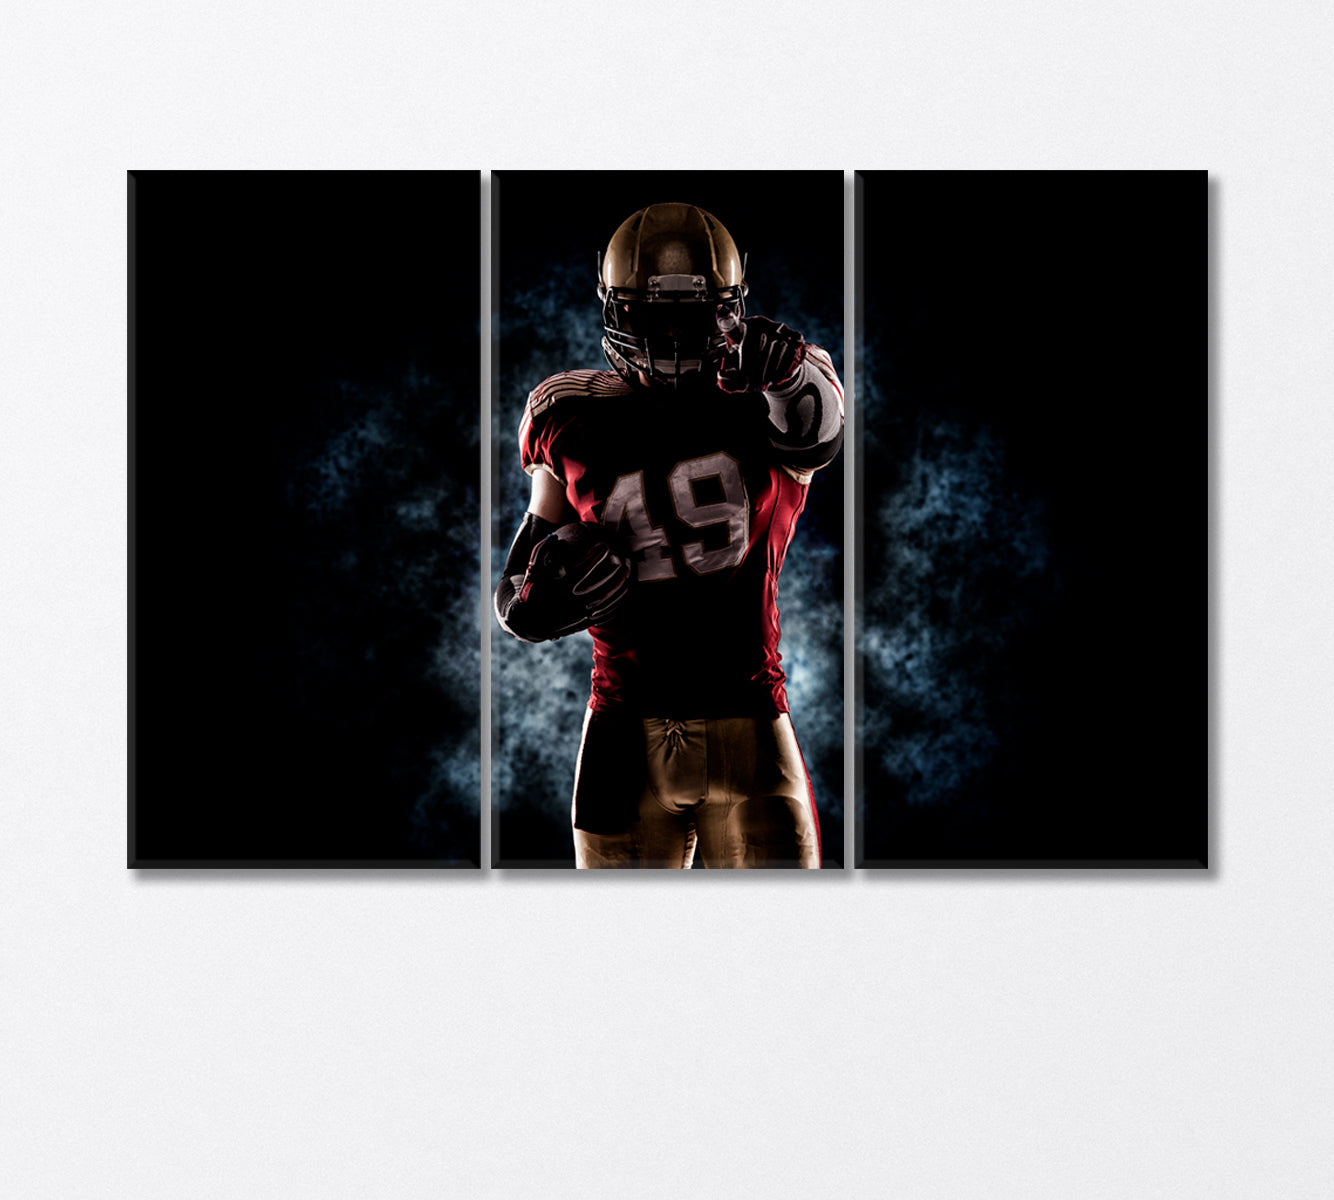 American Football Player in Dark Canvas Print-Canvas Print-CetArt-3 Panels-36x24 inches-CetArt